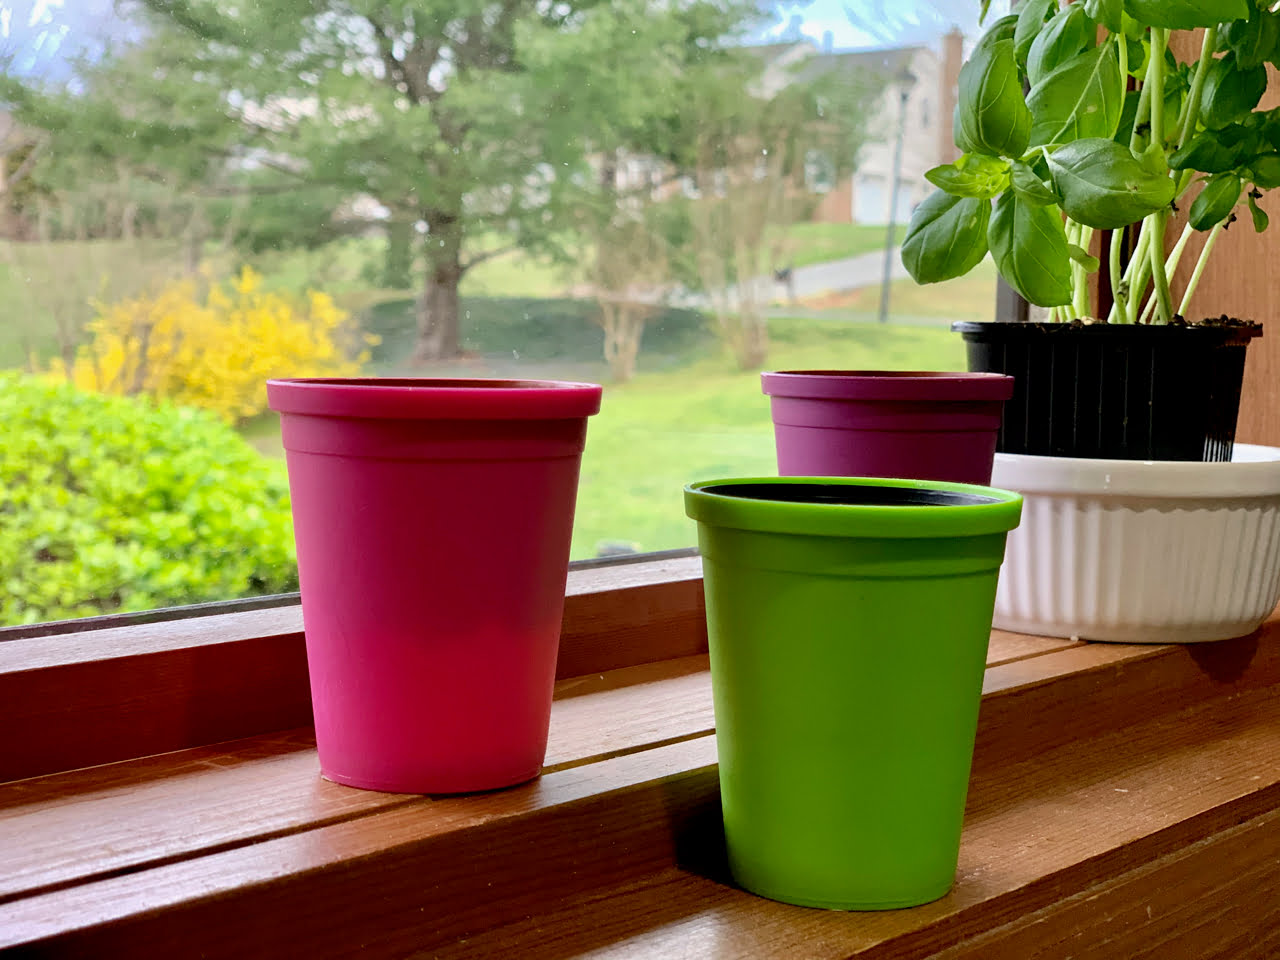 Even tiny pots grow life. 